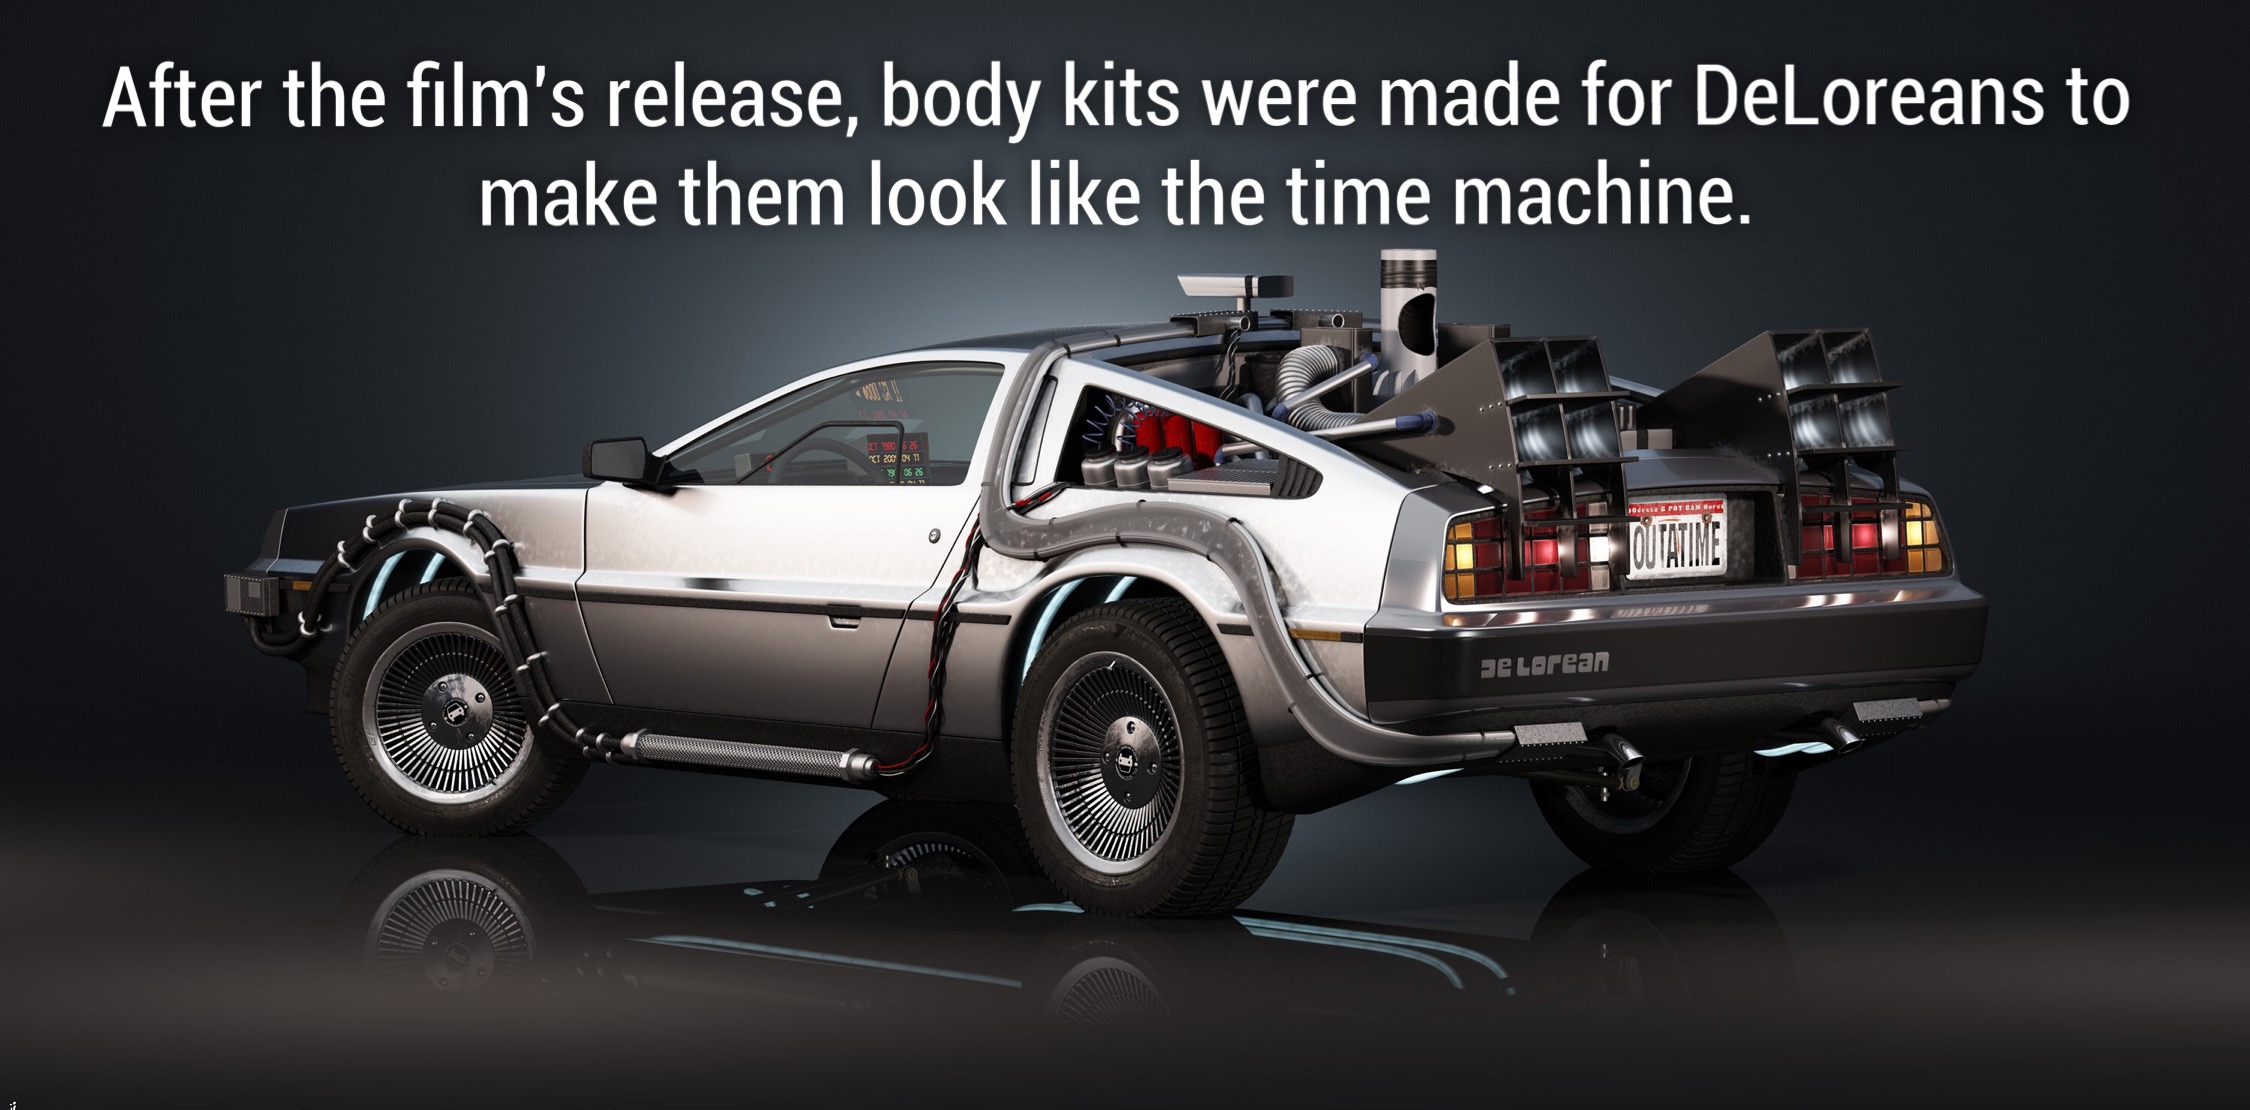 dmc delorean back to the future - After the film's release, body kits were made for DeLoreans to make them look the time machine. Na Xi 1980 6 26 Ct 200041 80626 dessa & Pot Ban Neru De Lorean